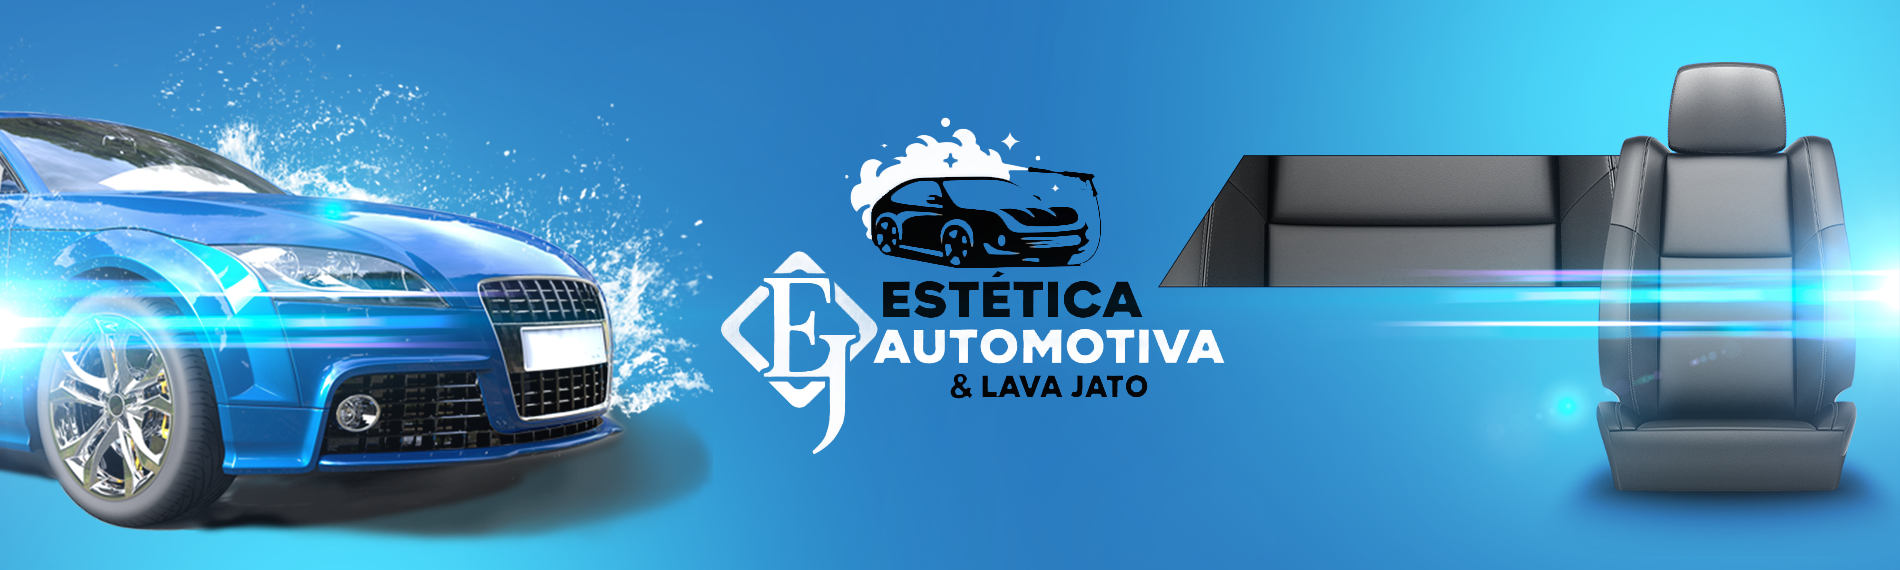 banner da empresa EJ Estética Automotiva e Lava Jato